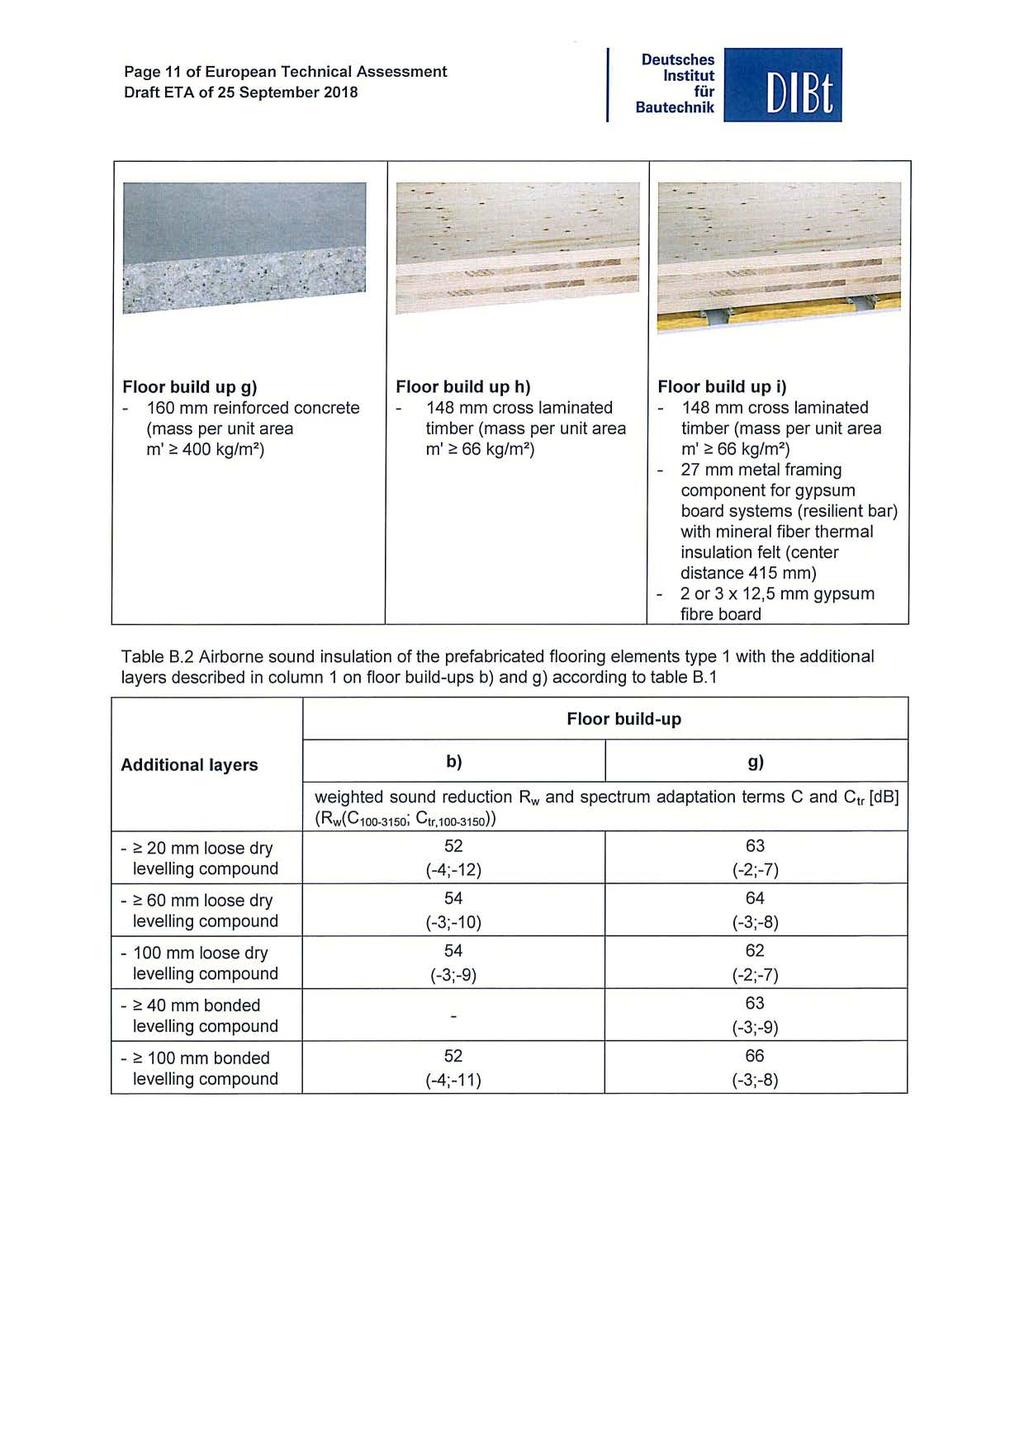 Page 11 of European Technical Assessment Draft ETA of 25 September 2018 Deutsches fiir DI Et -- Floor build up g) - 160 mm reinforced concrete (mass per unit area m' ;:: 400 kg/m 2 ) Floor build up